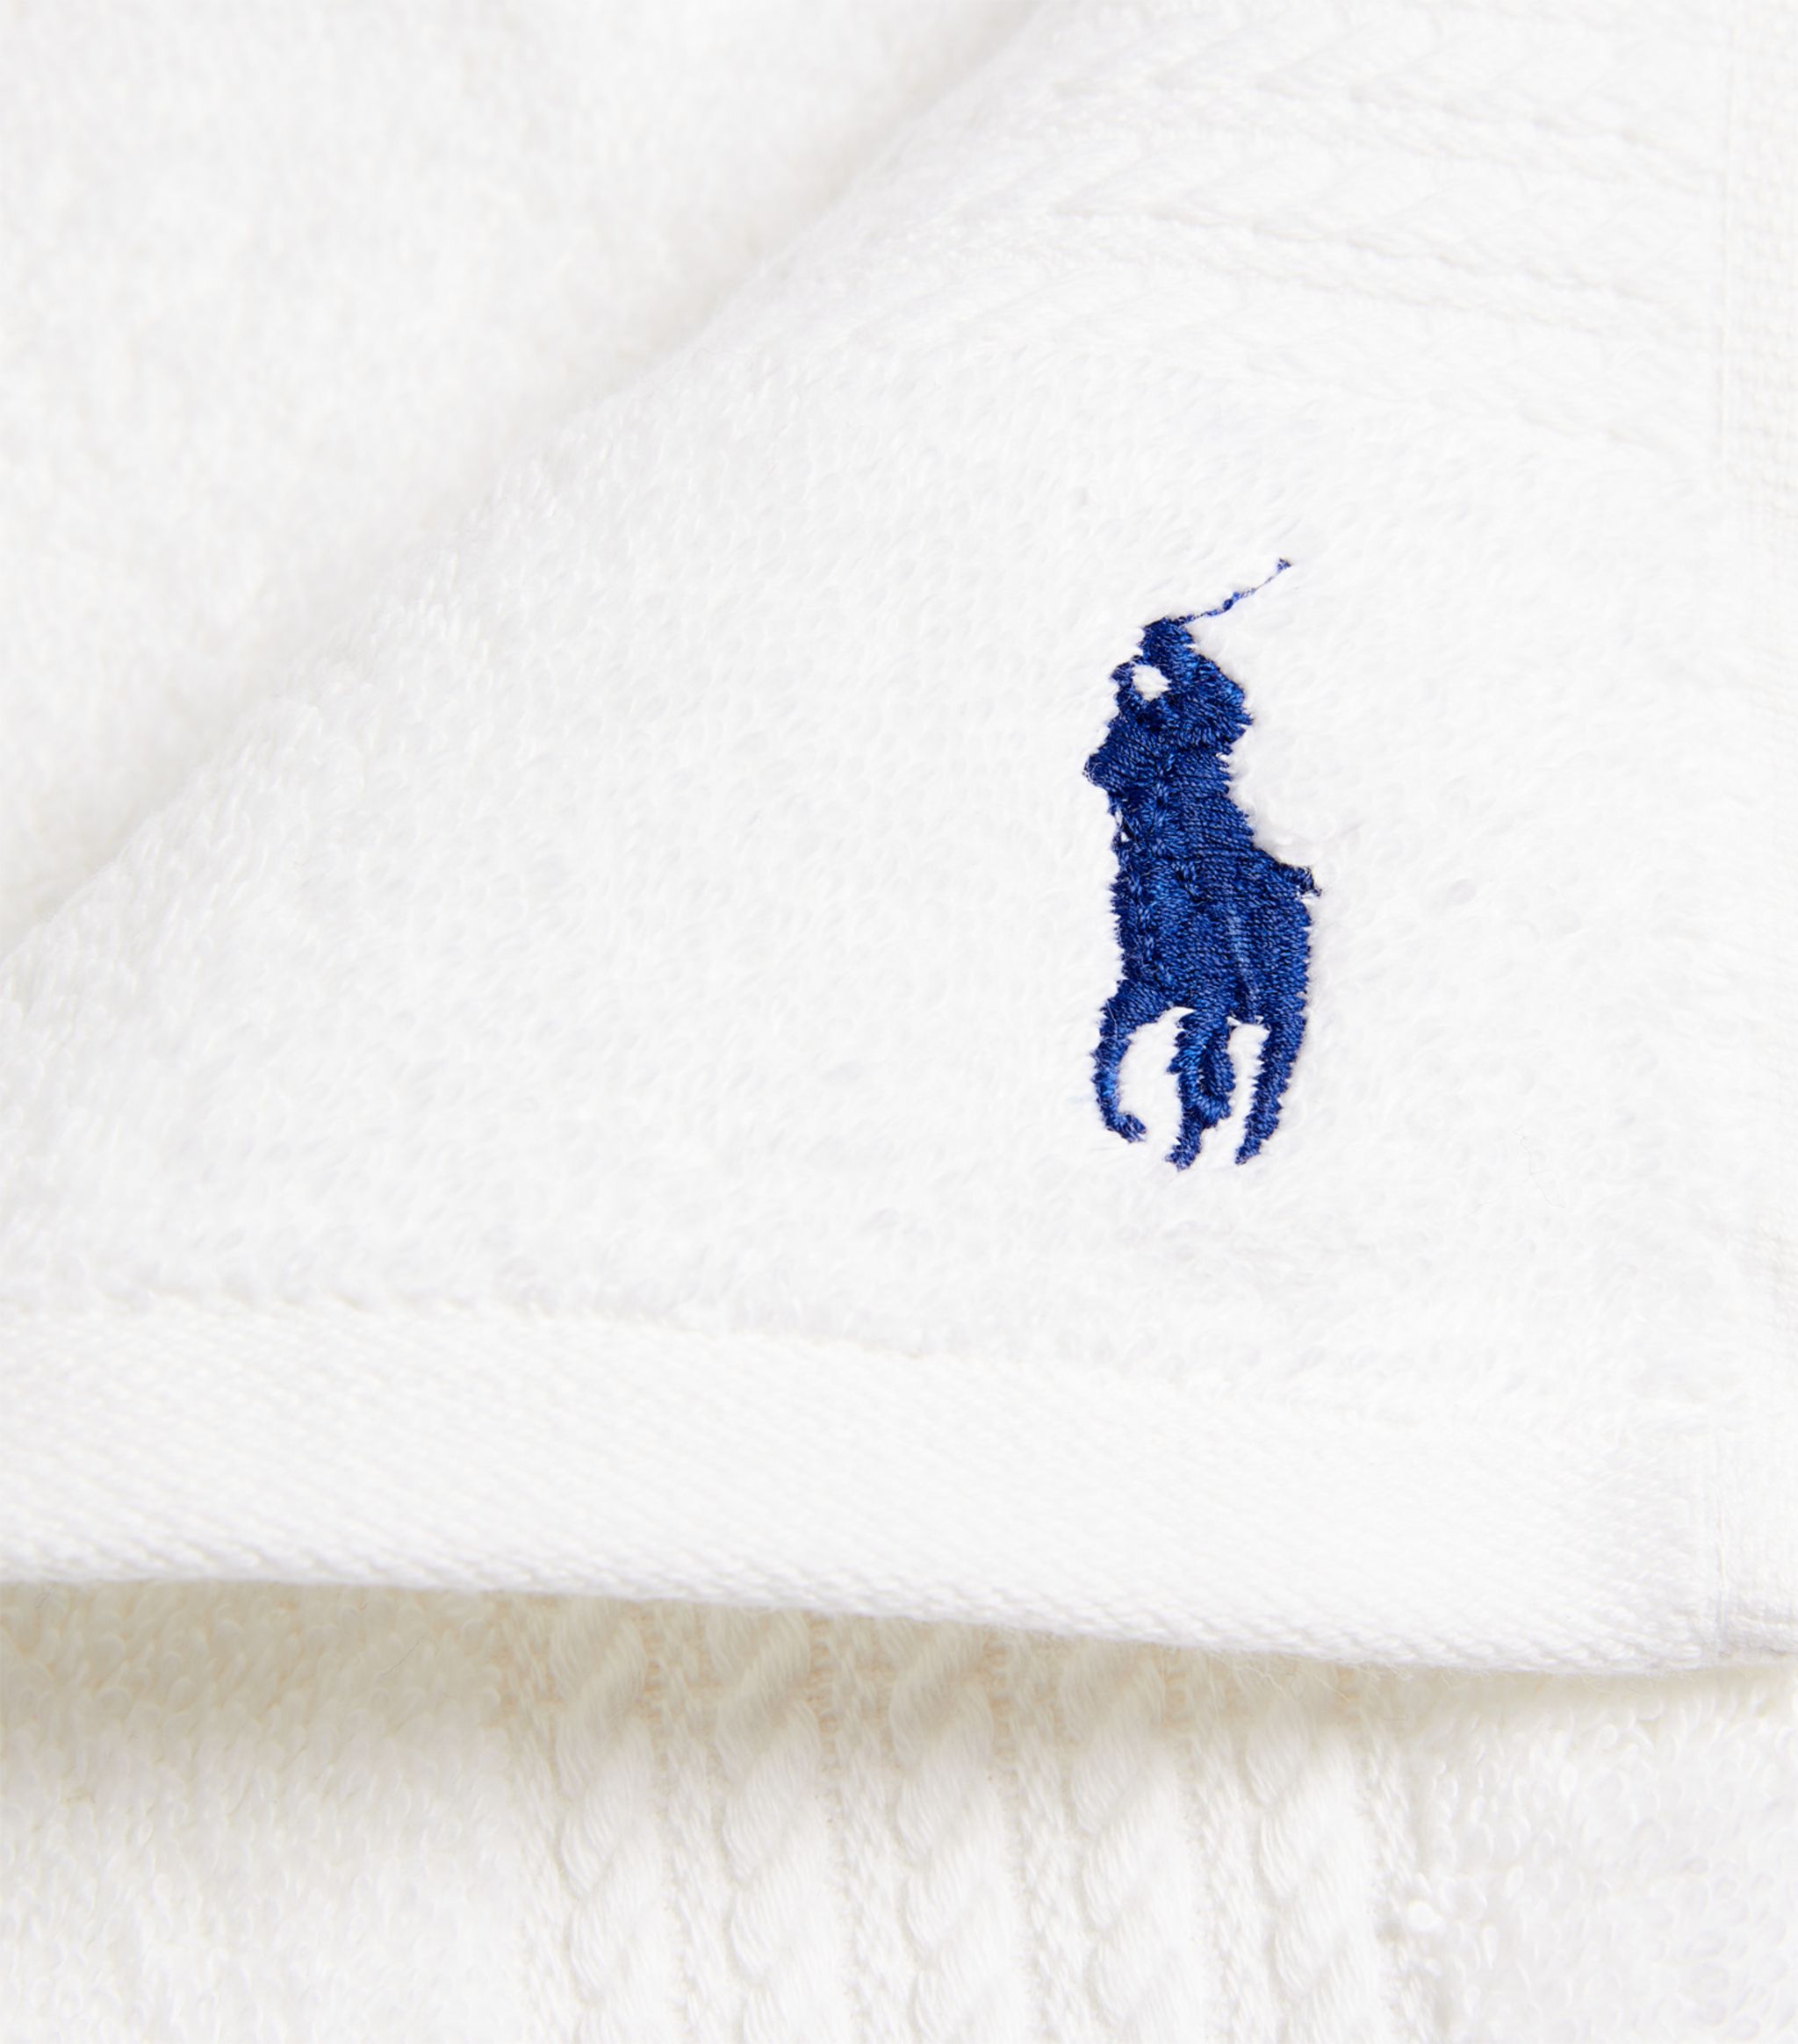 Ralph Lauren Polo Player Cotton Bath Towel - White